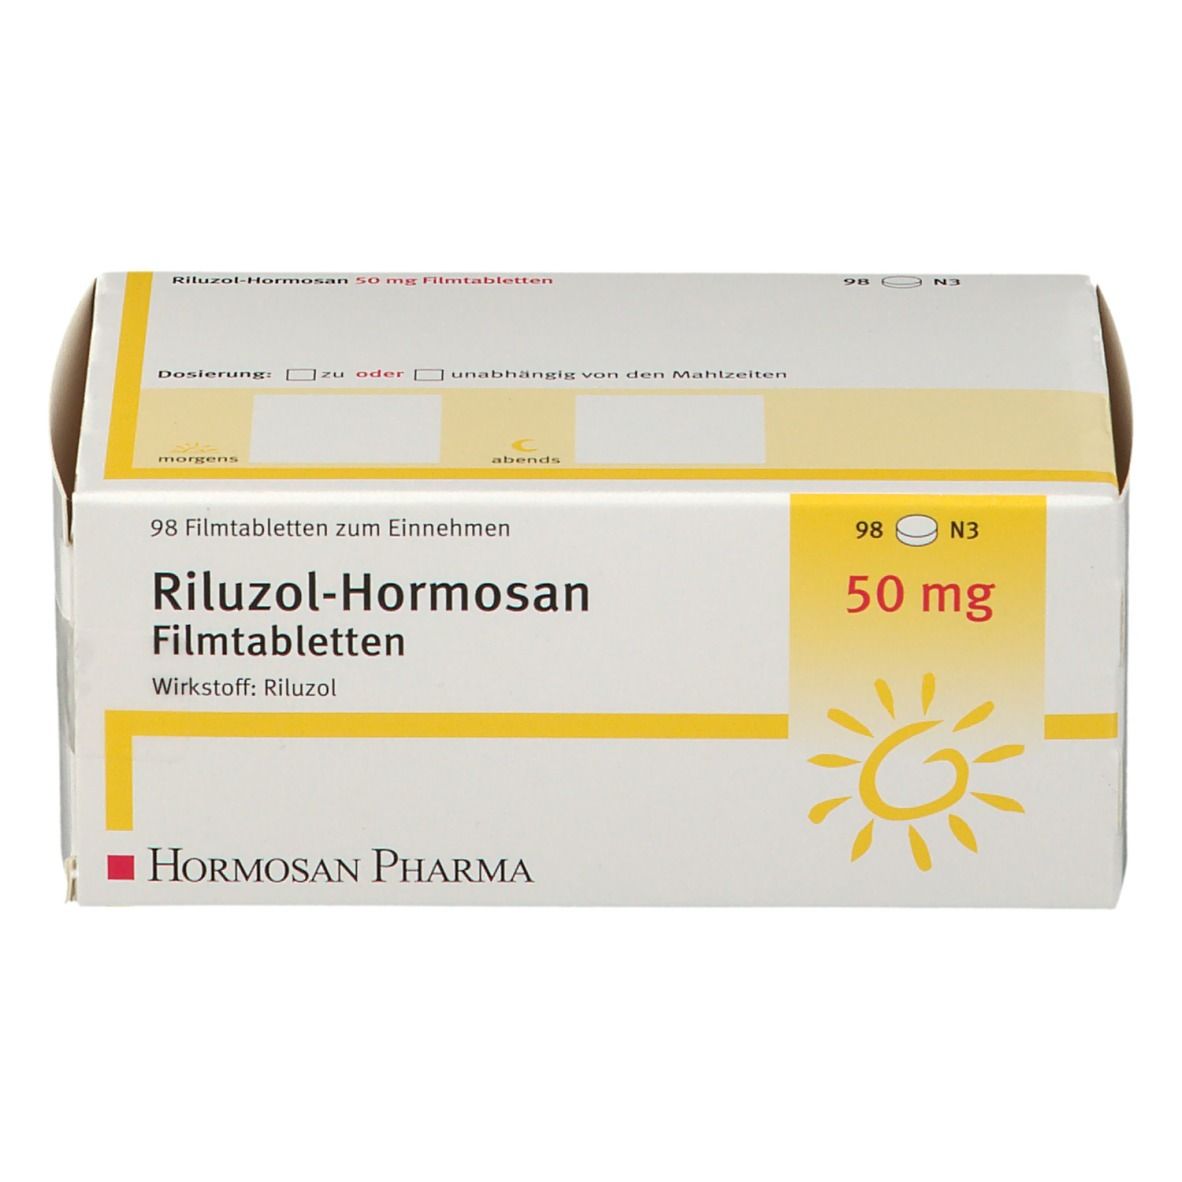 Riluzol-Hormosan 50 mg